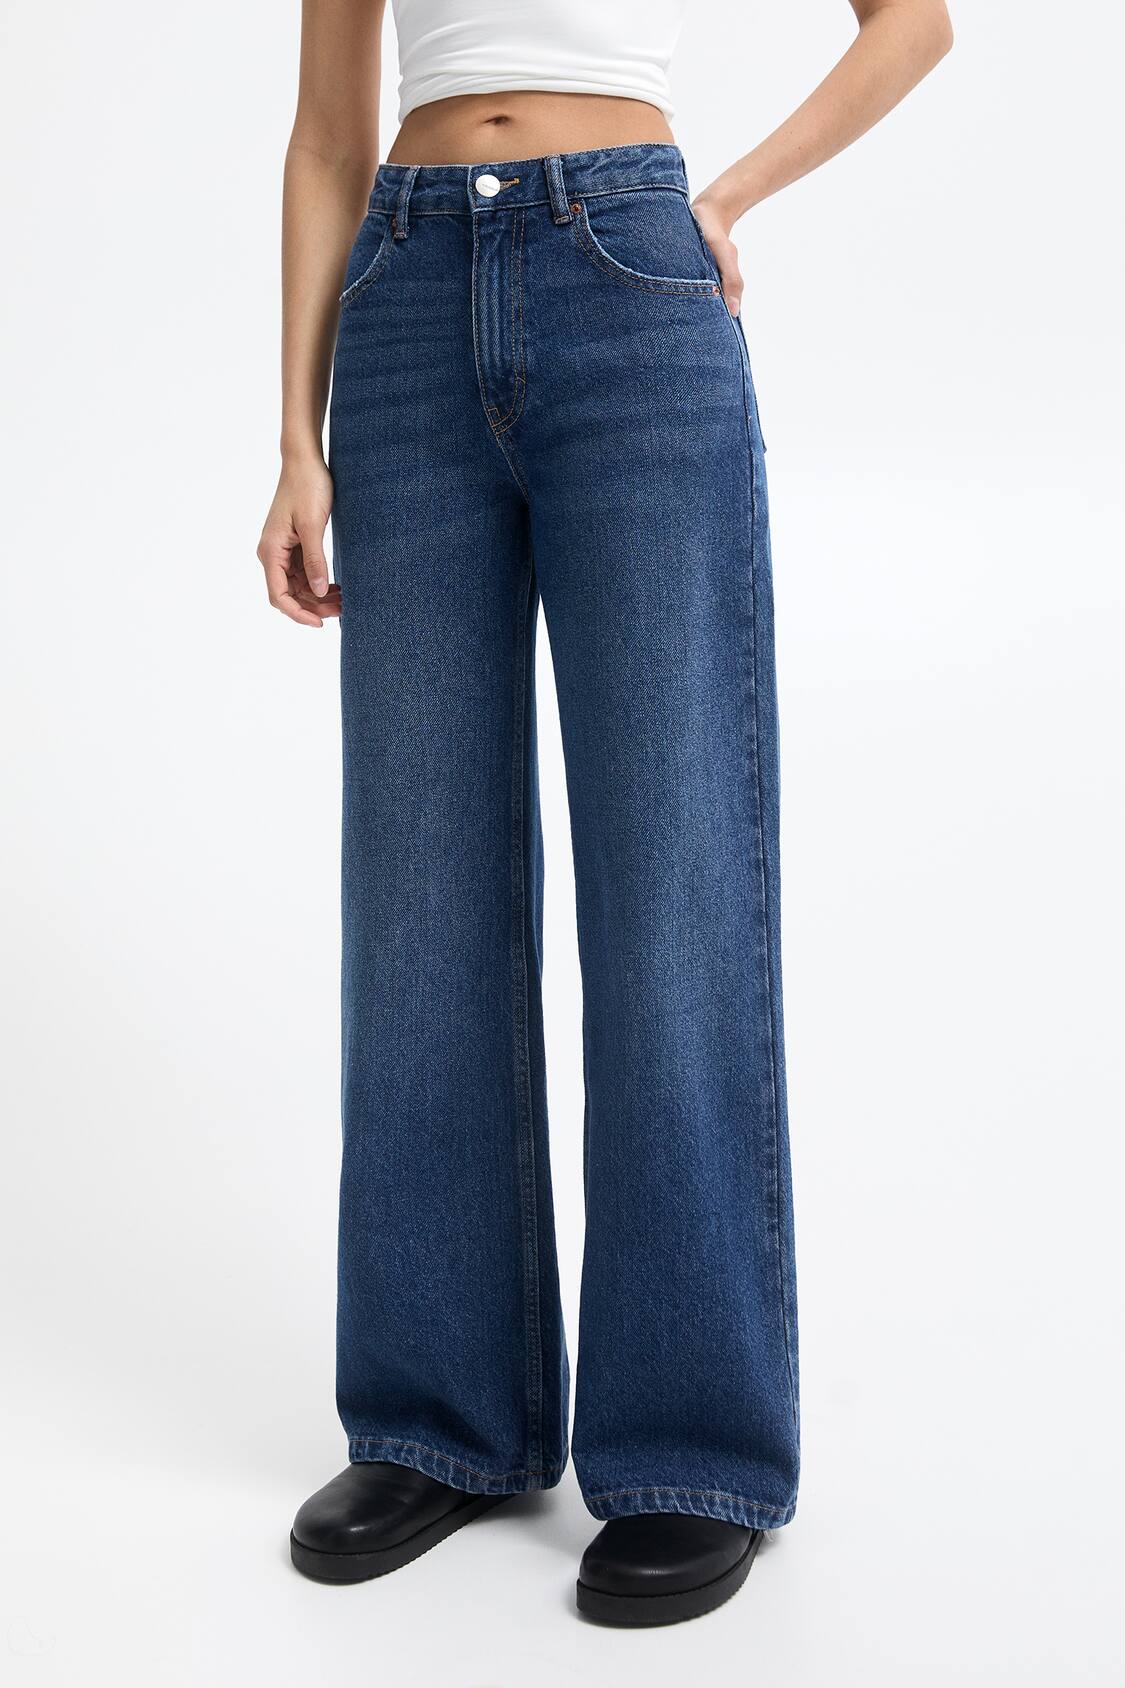 Pantalones ajustables tiro alto 🍑 - Jeans LG collection